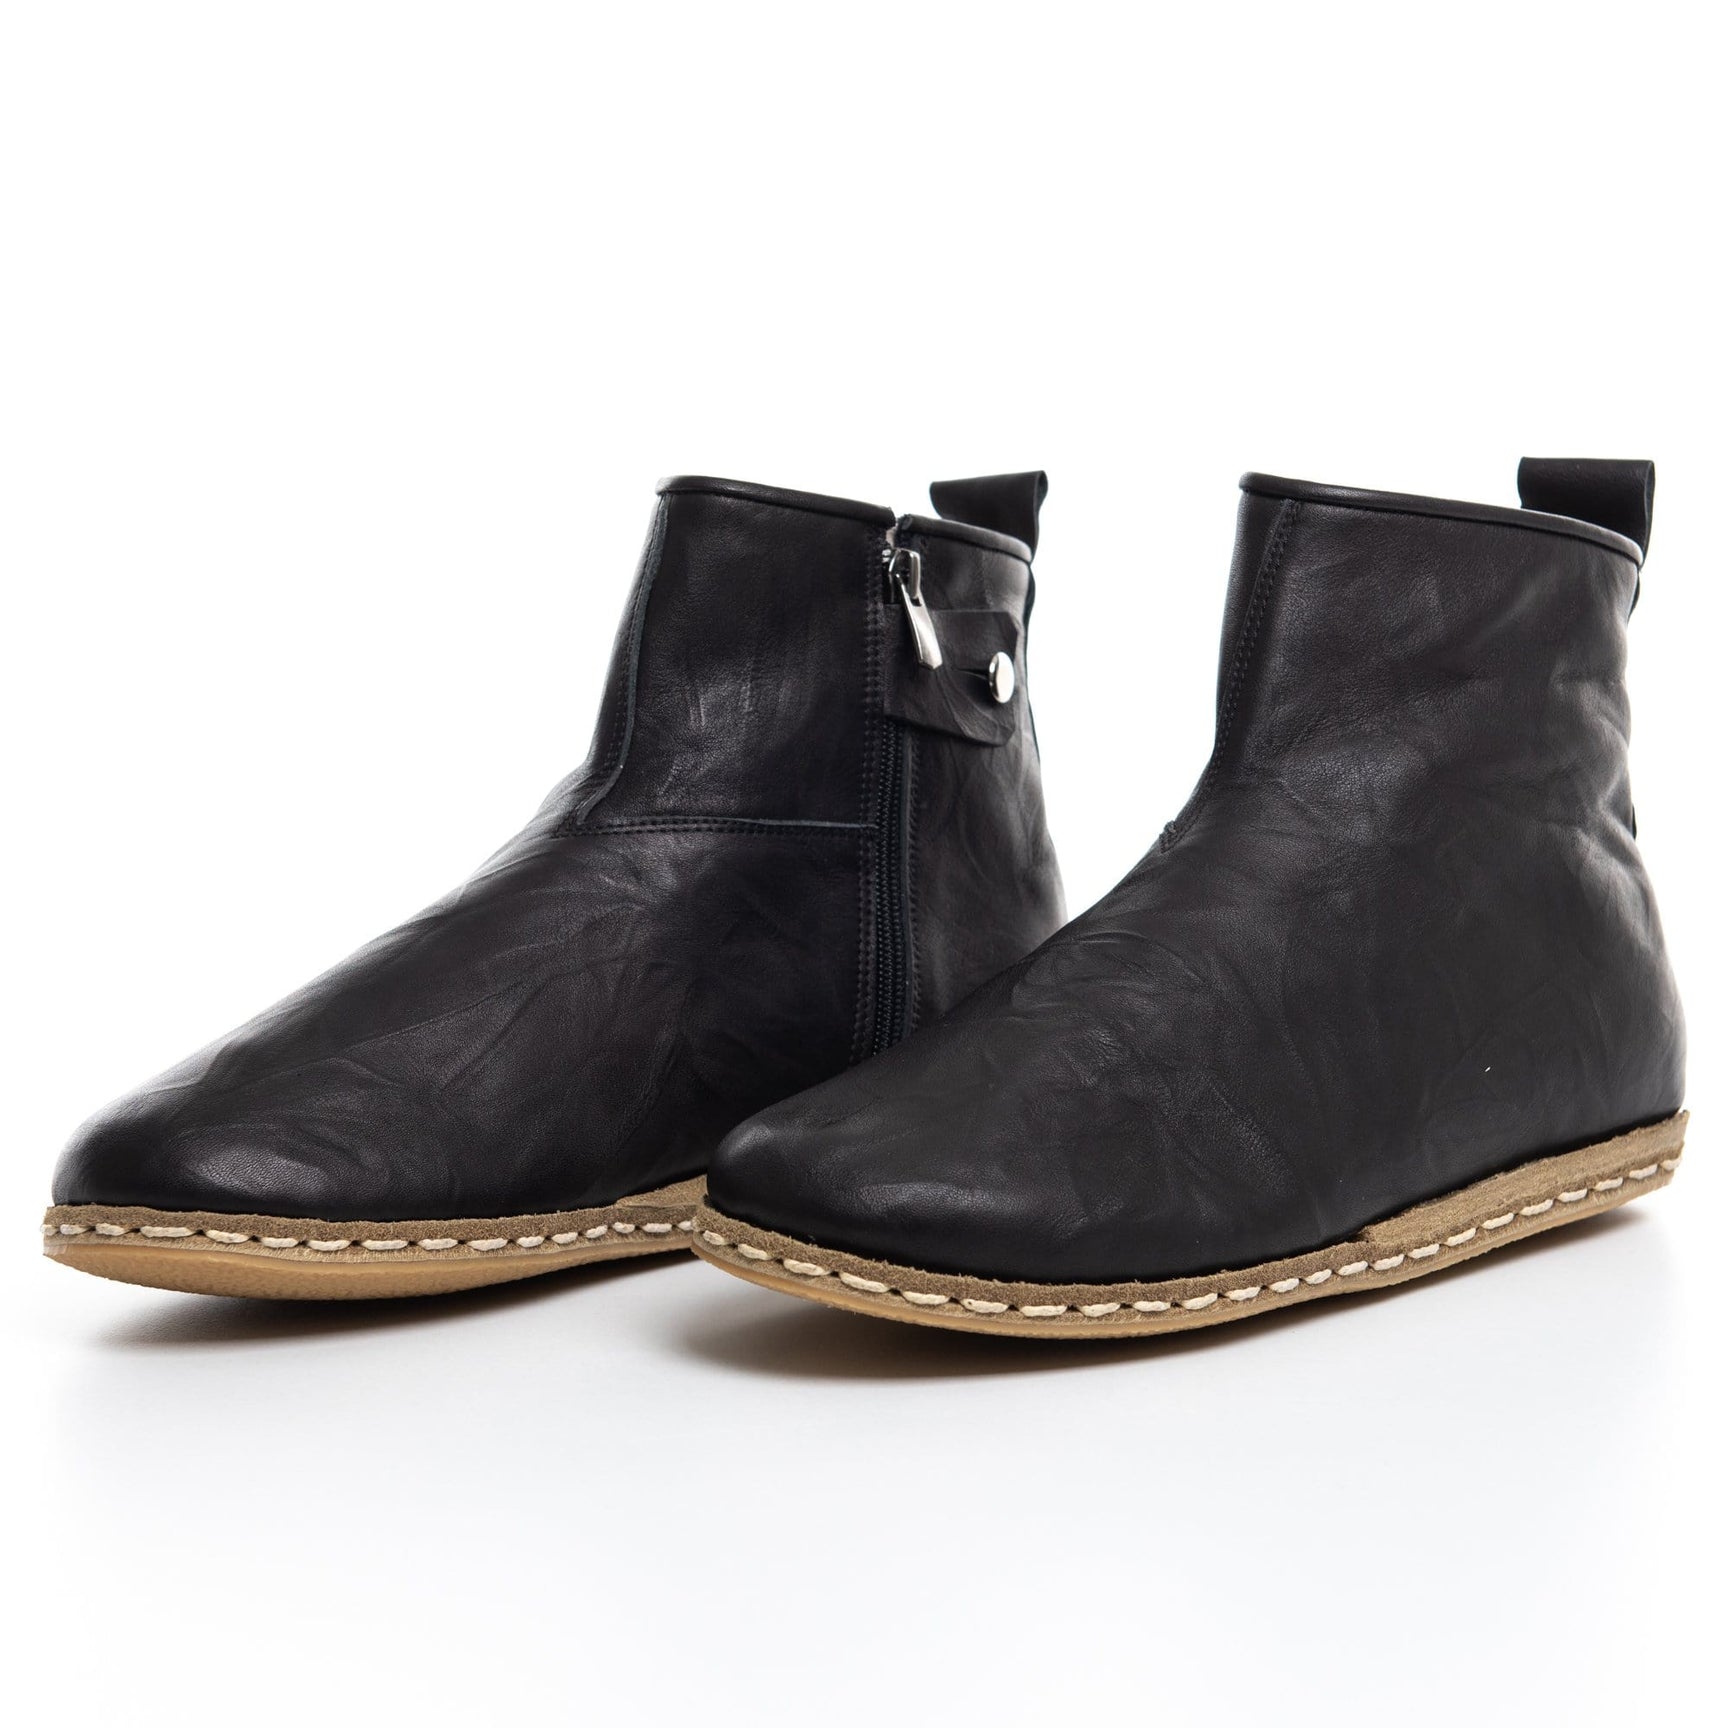 Black Boots - Turkish Boots for Women & Men : Atlantis Handmade Shoes ...